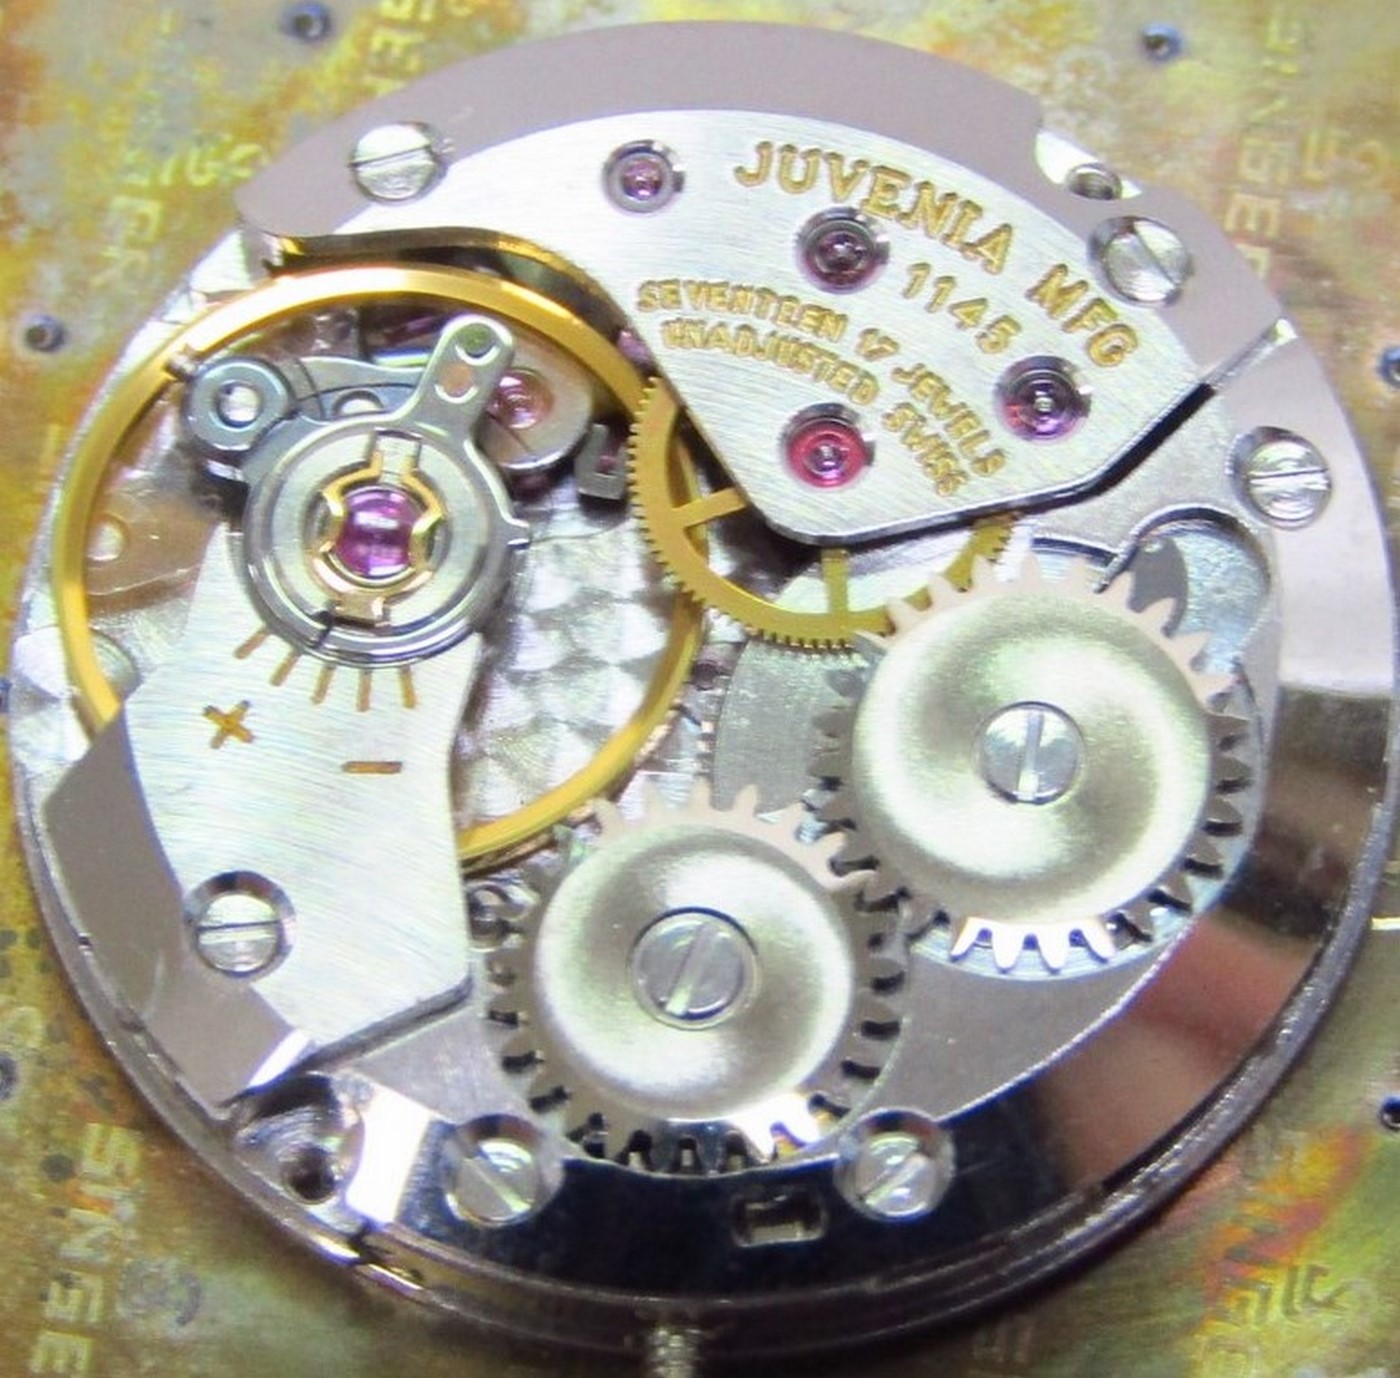 JUVENIA. Reloj de pulsera para caballero. Acero. Ca. 1960